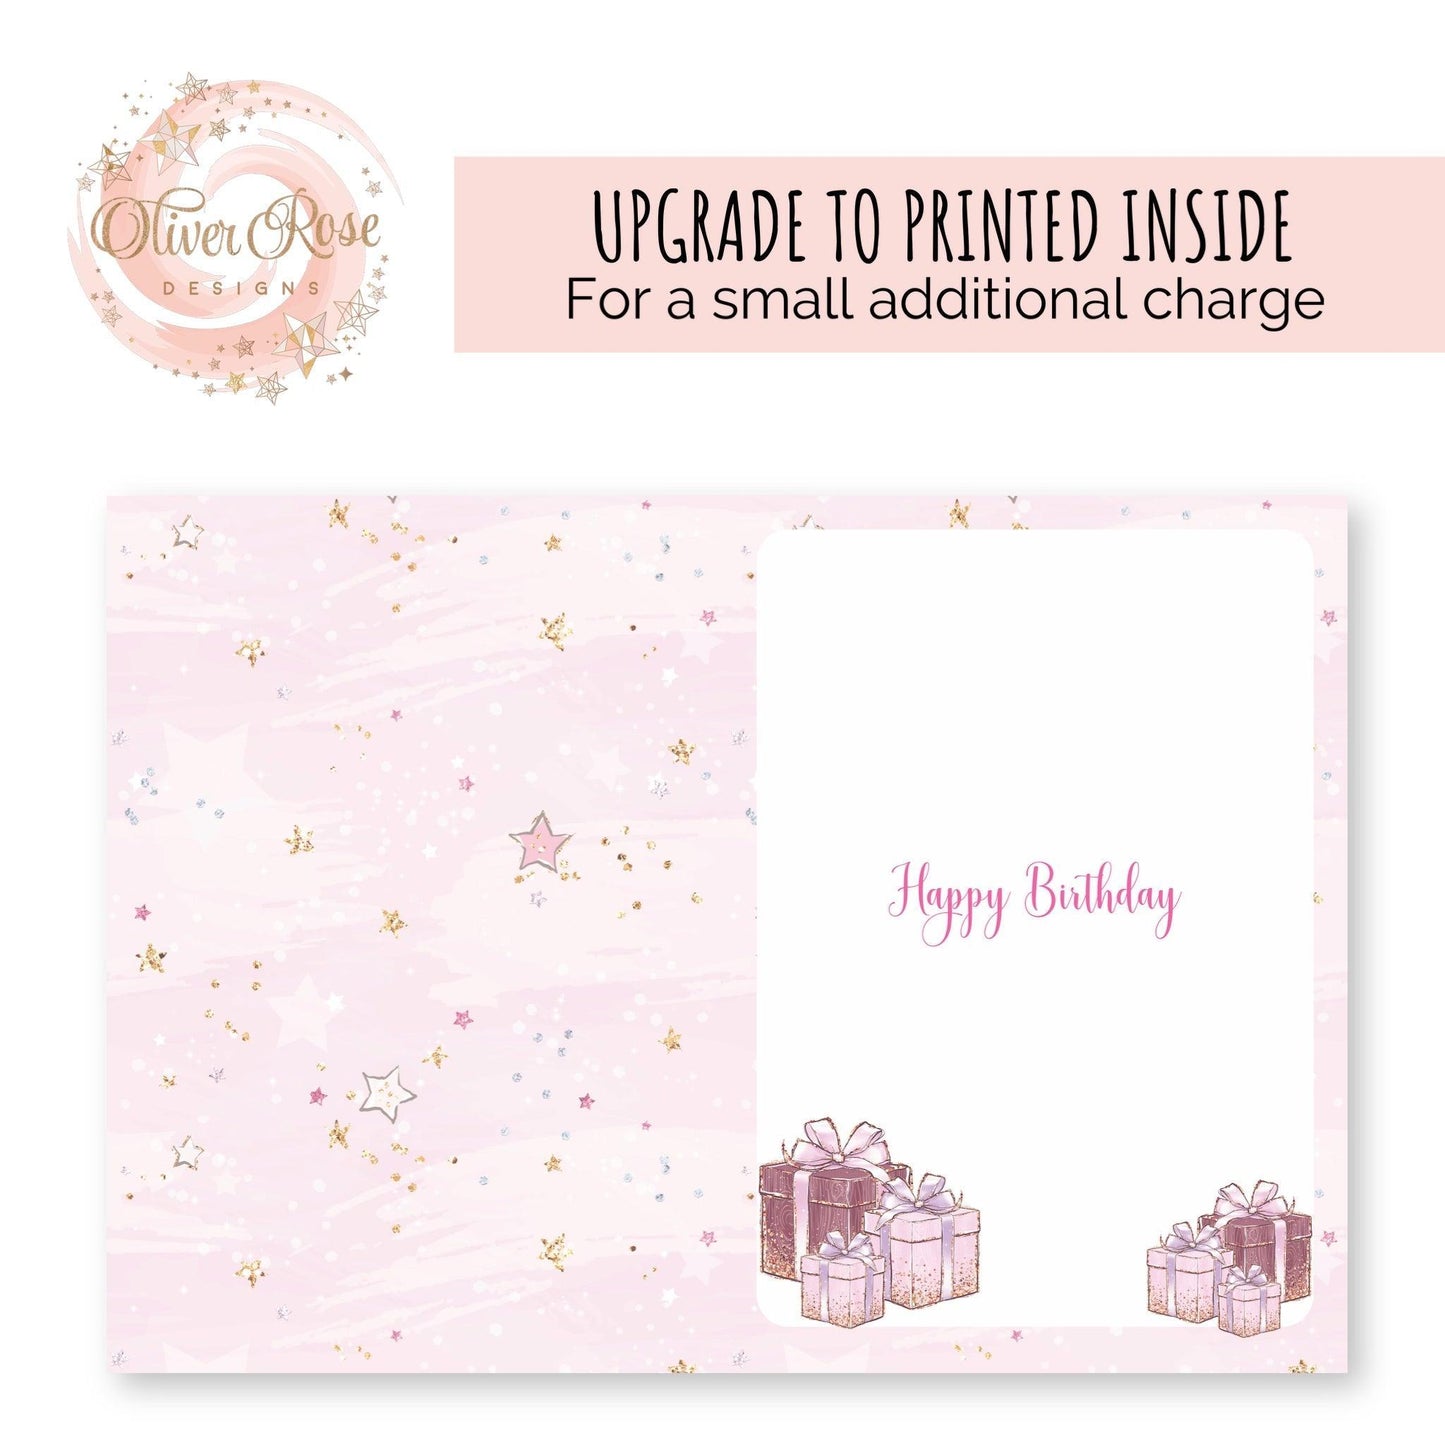 upgrade birthday card to matching printed design inside teengirl girl on phone